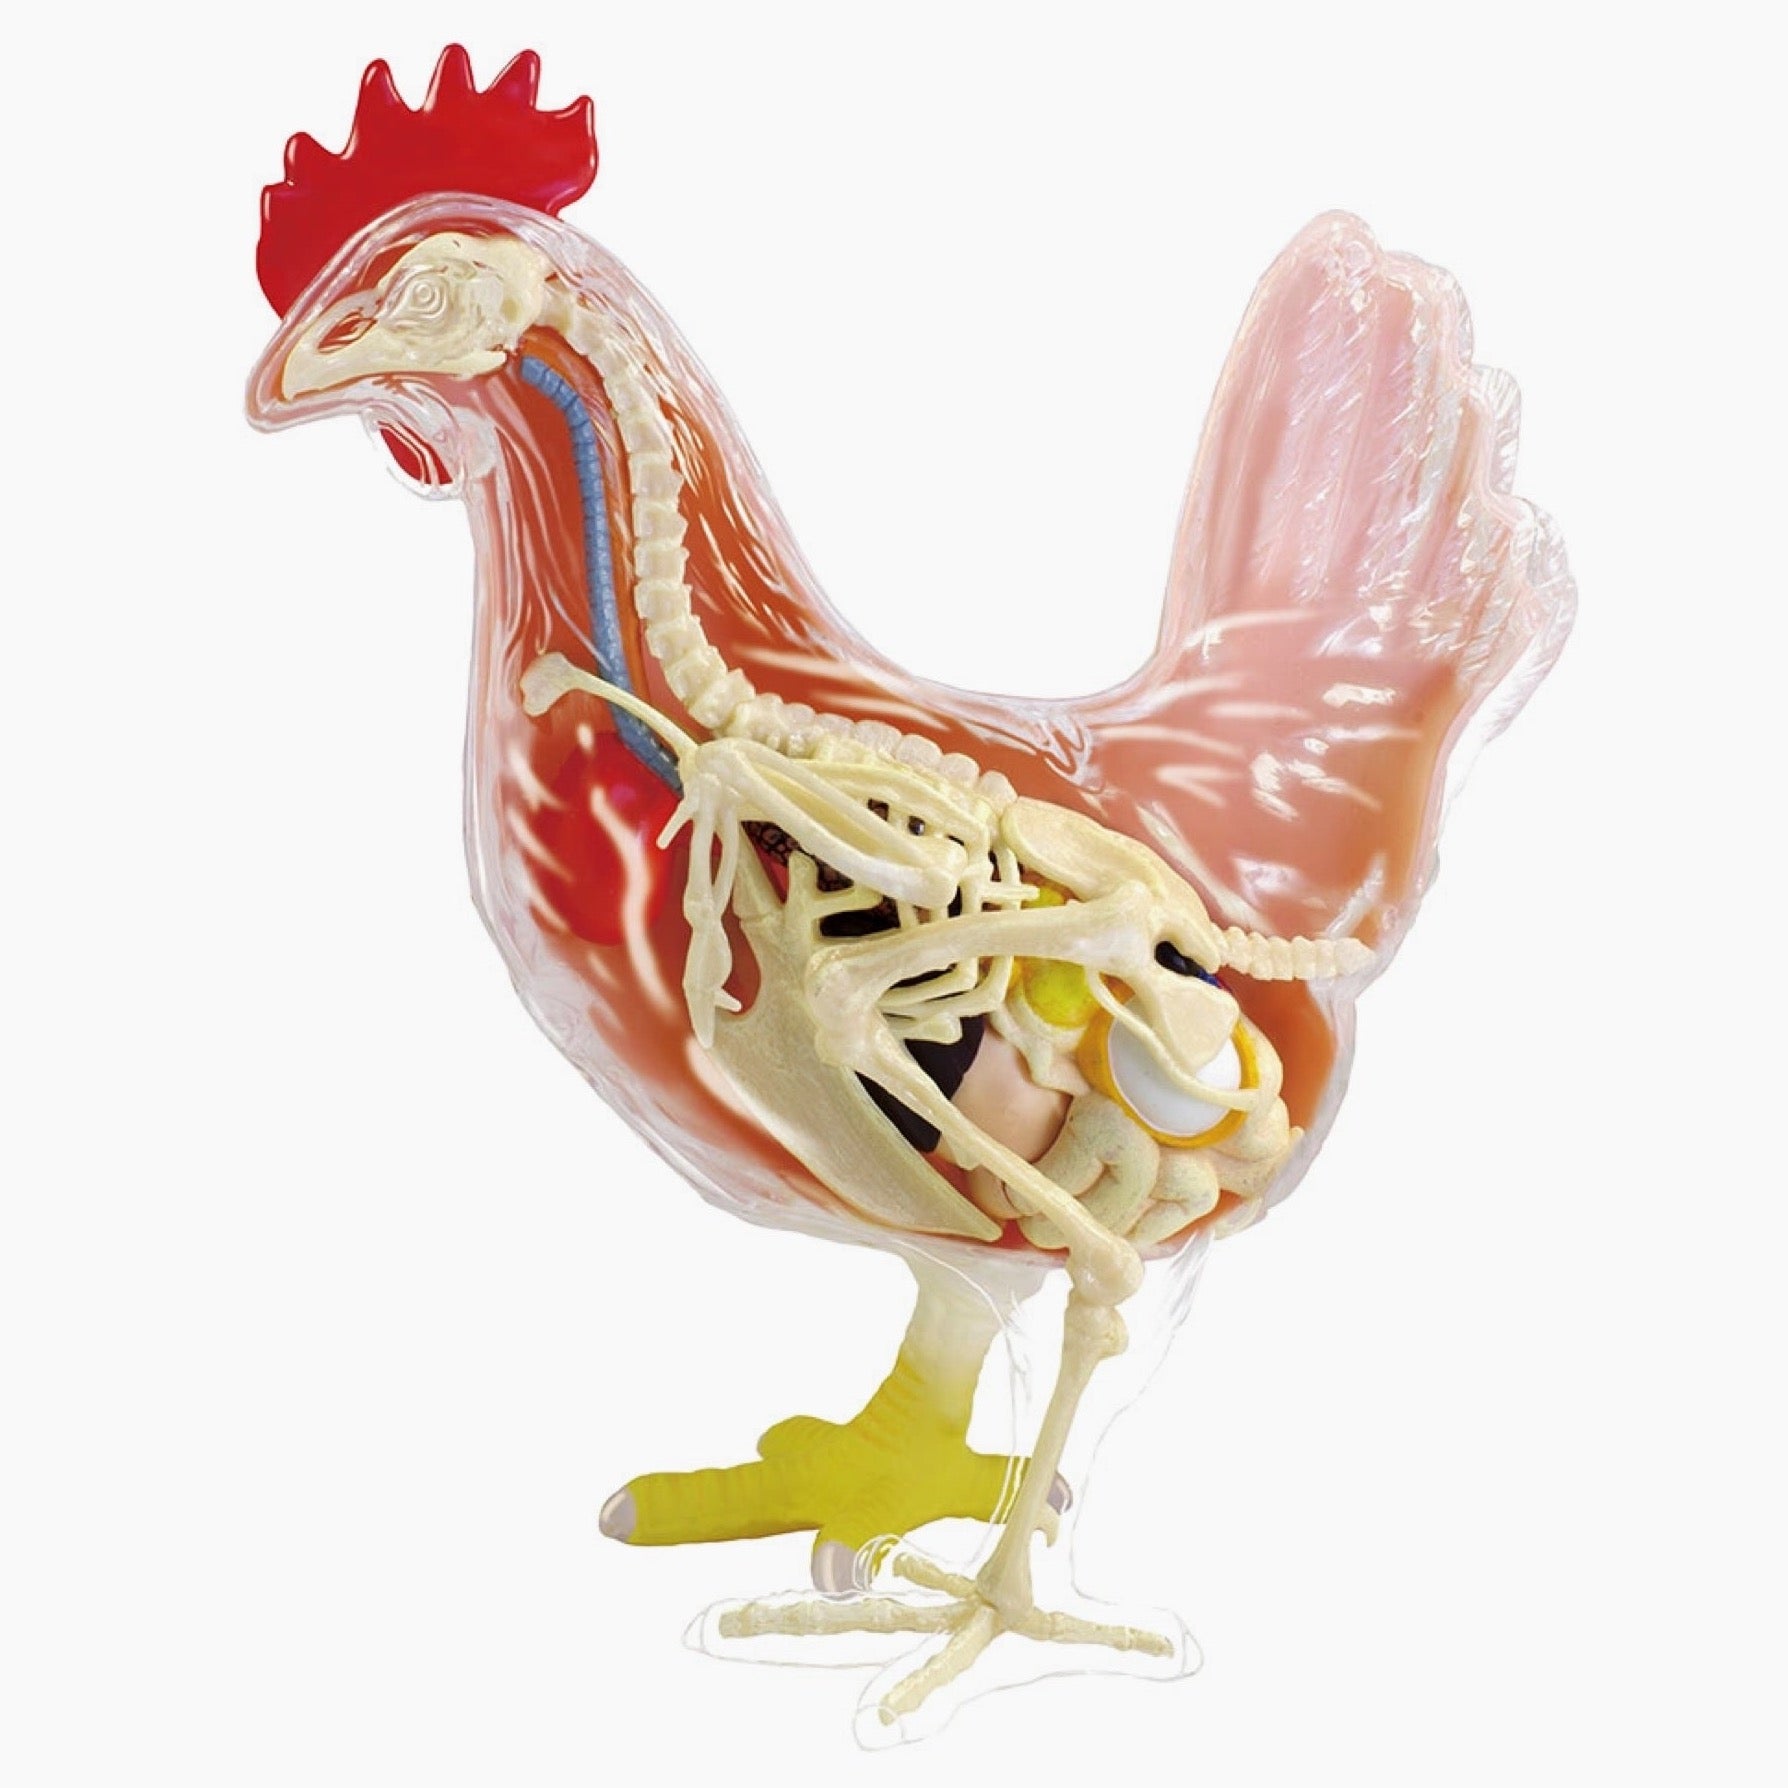 Chicken Anatomy Model